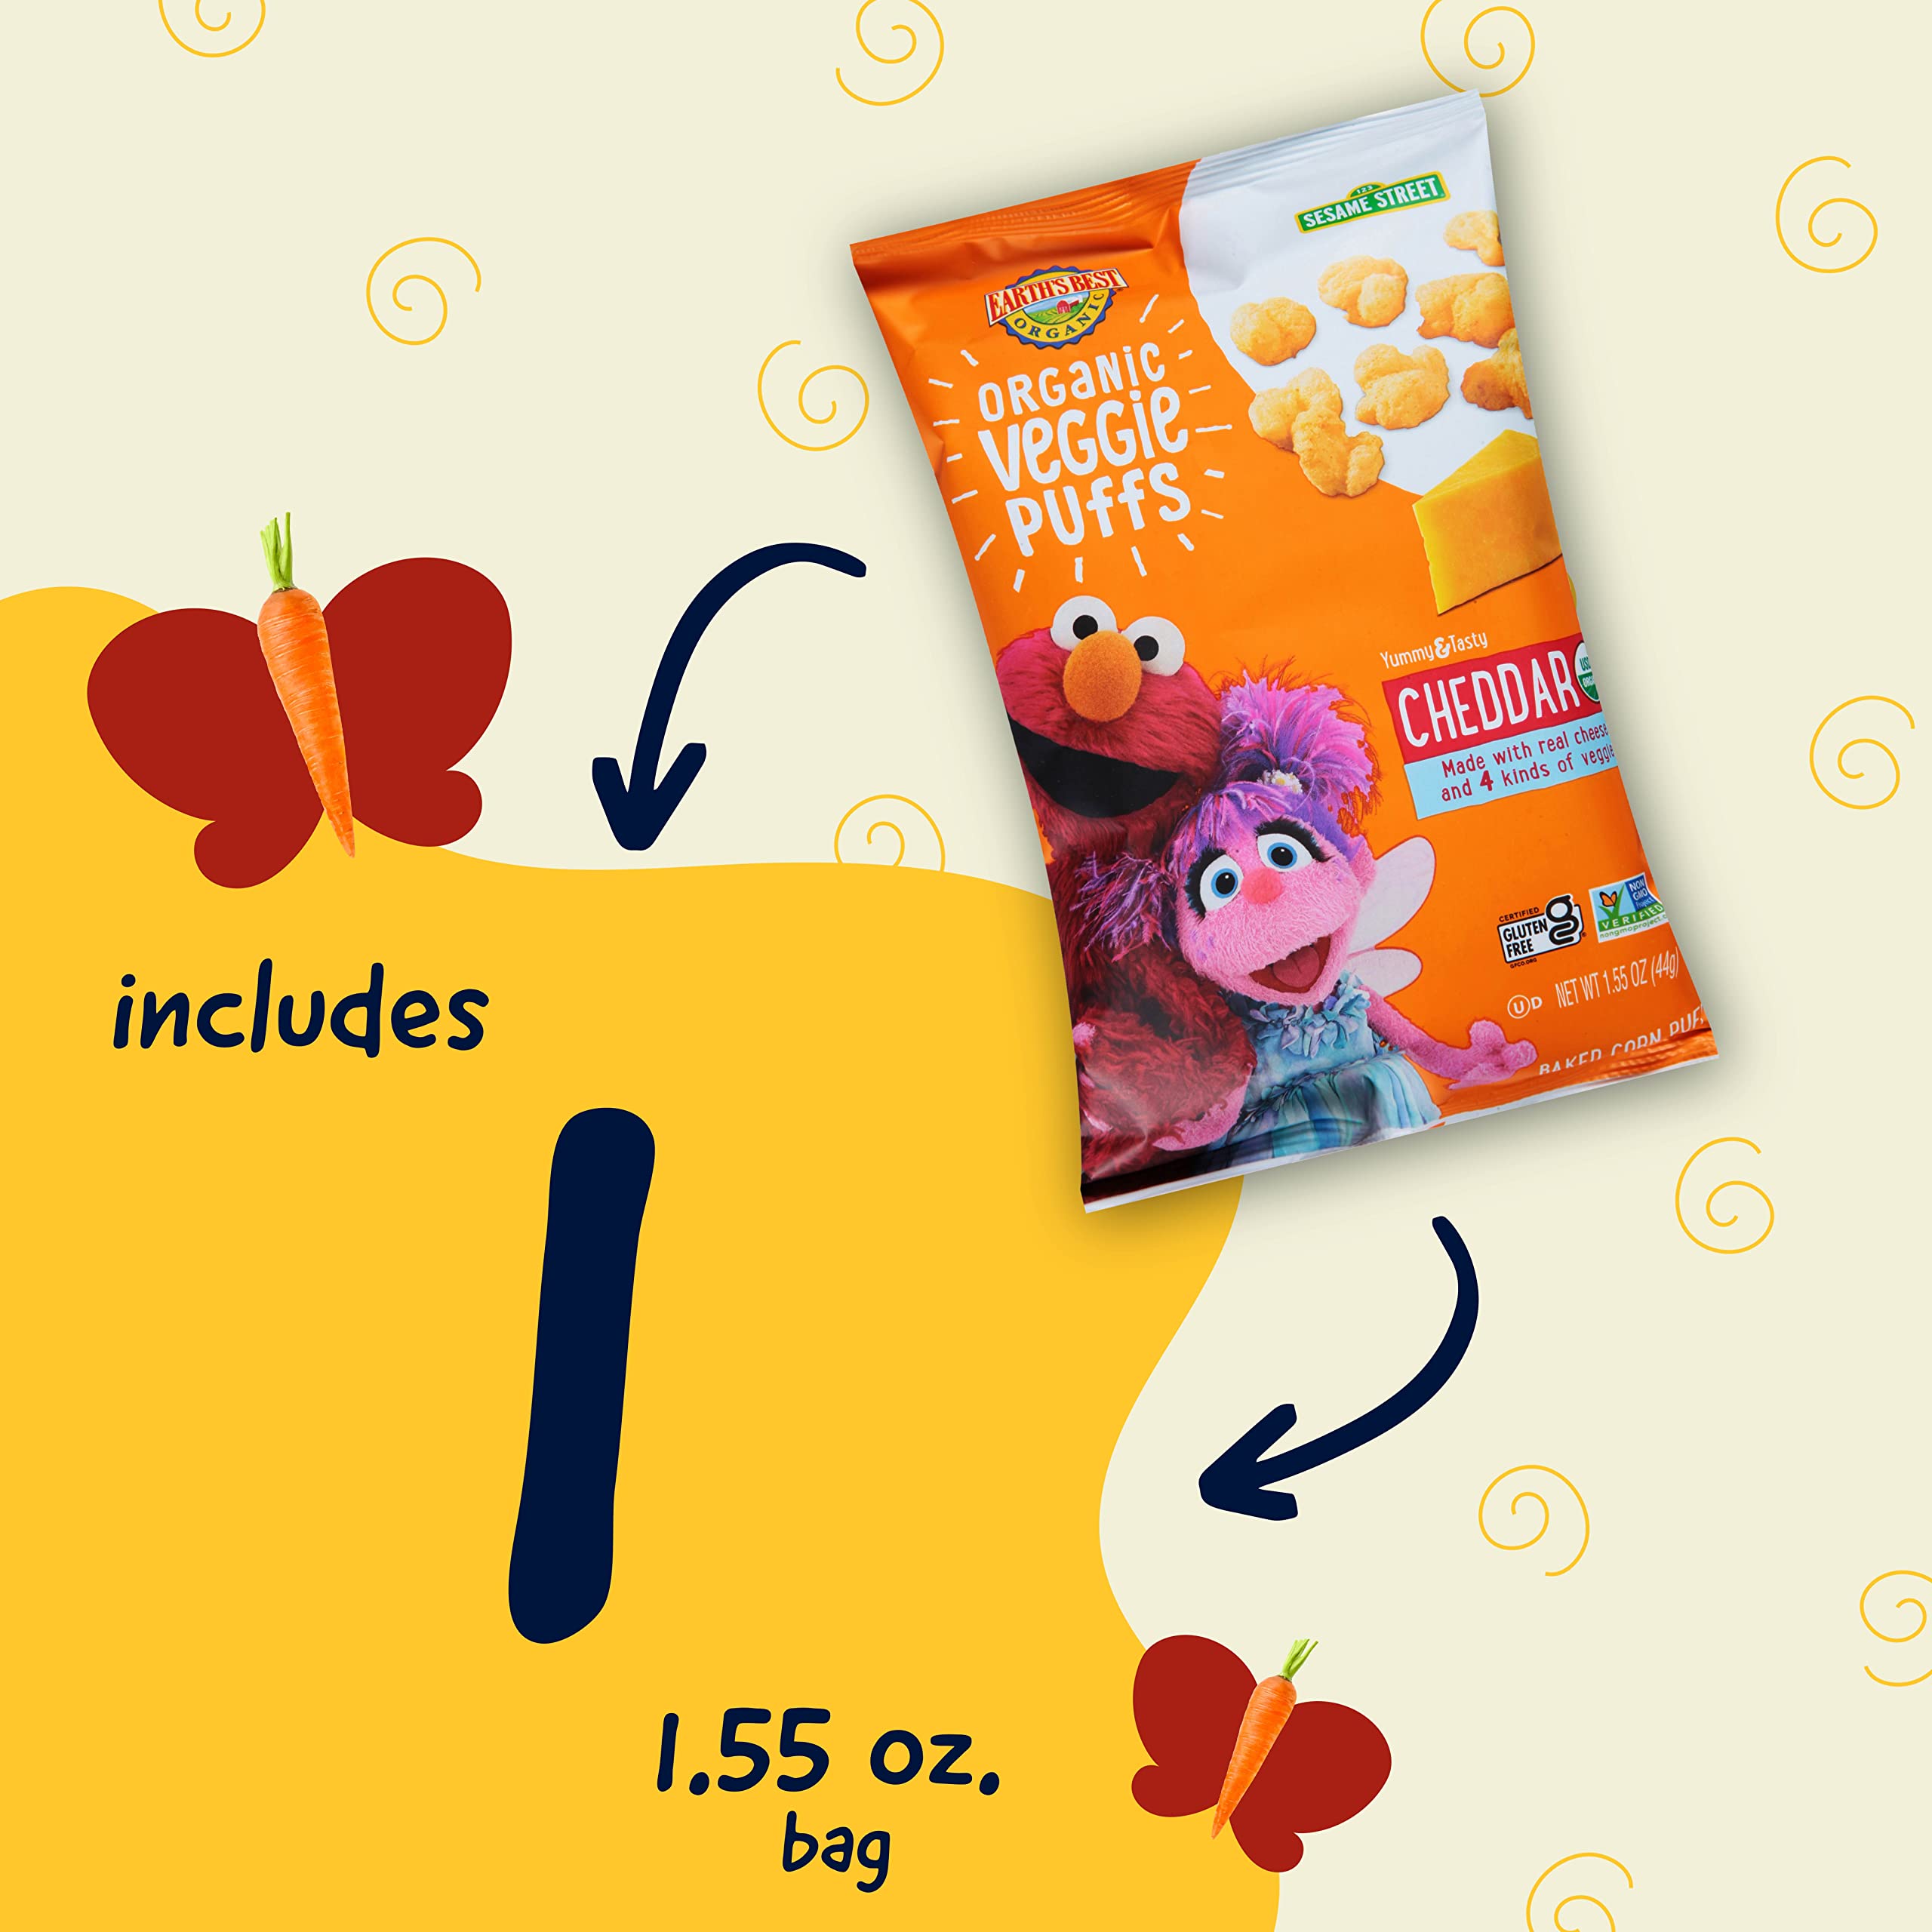 Earth's Best Organic Kids Snacks, Sesame Street Toddler Snacks, Organic Cheddar Veggie Puffs, Gluten Free Snacks for Kids 2 Years and Older, Cheddar, 1.55 oz Bag (Pack of 3)